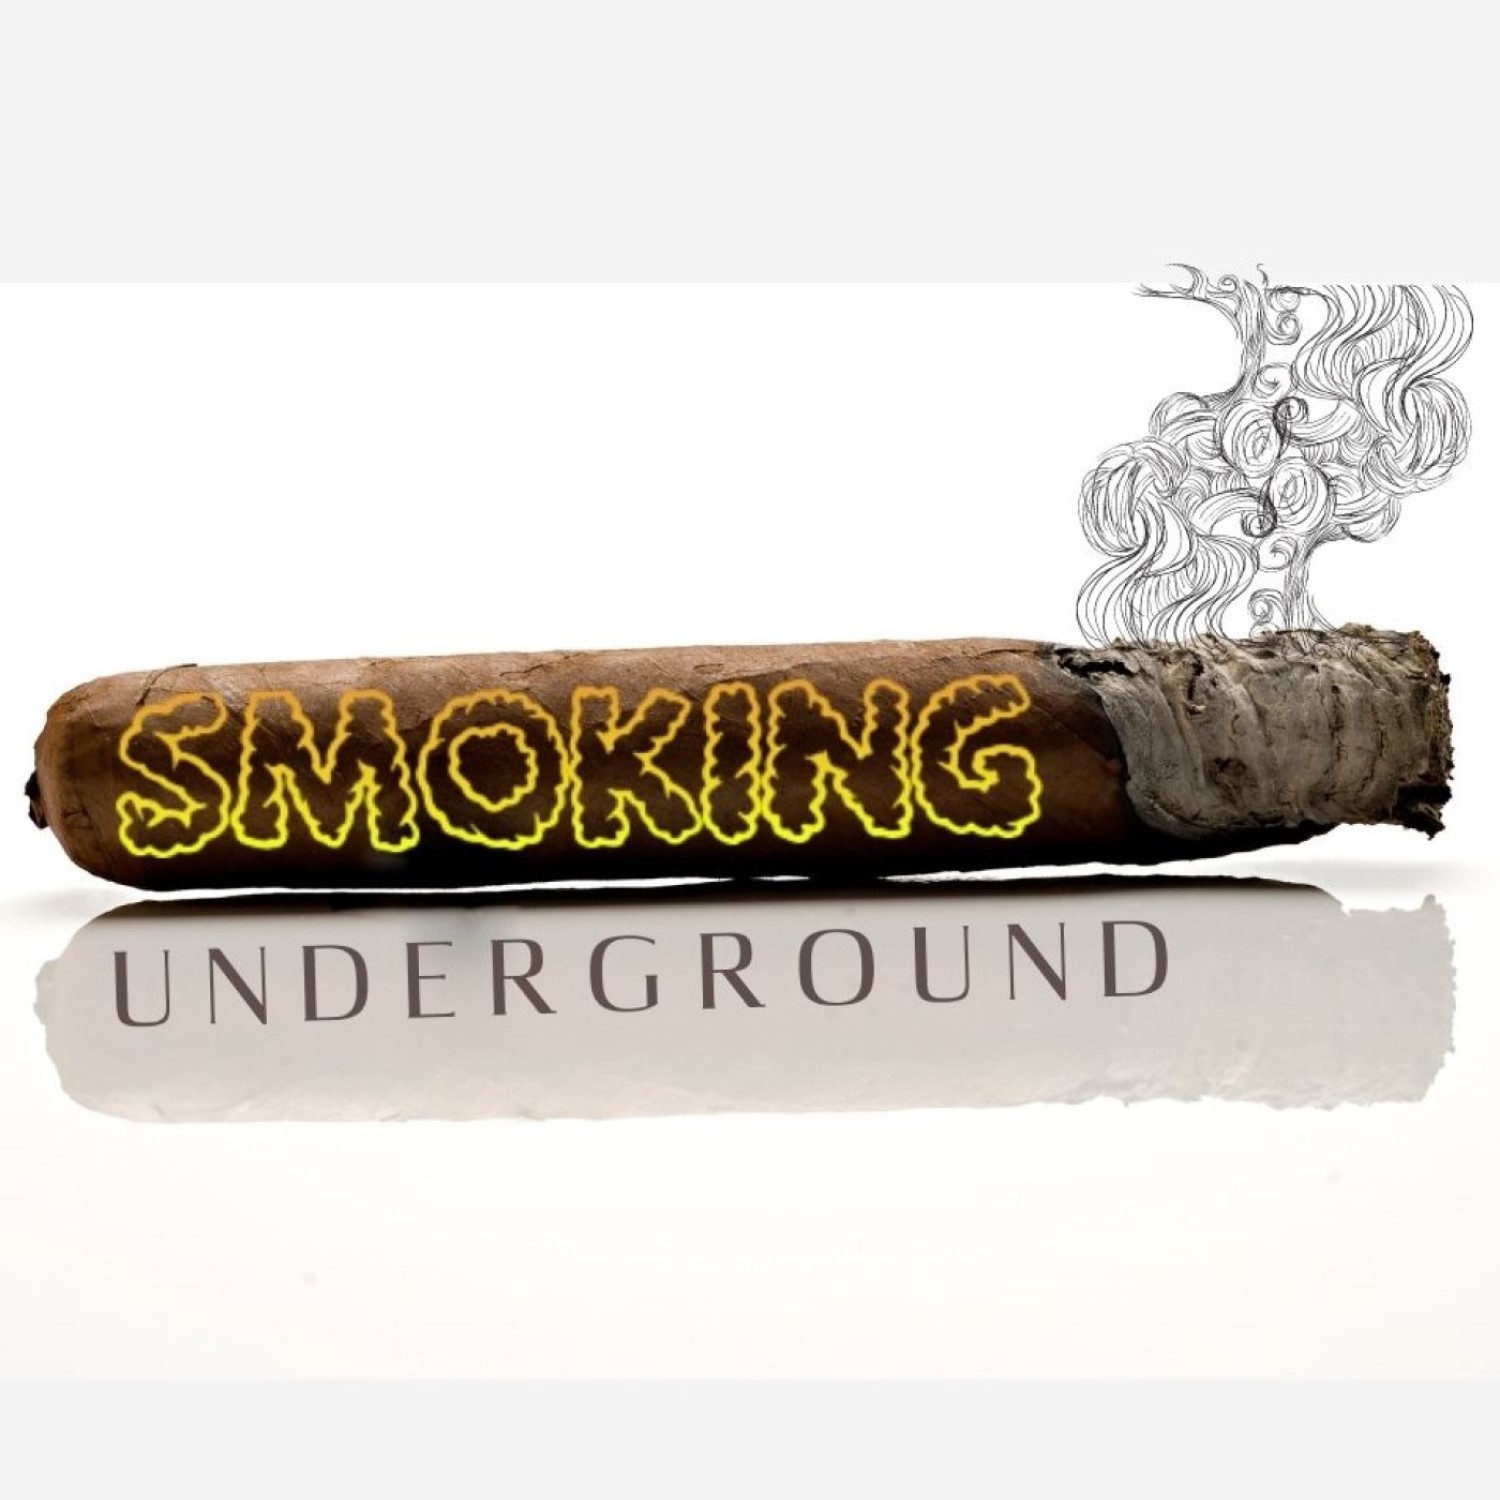 Artwork for podcast Smoking Underground